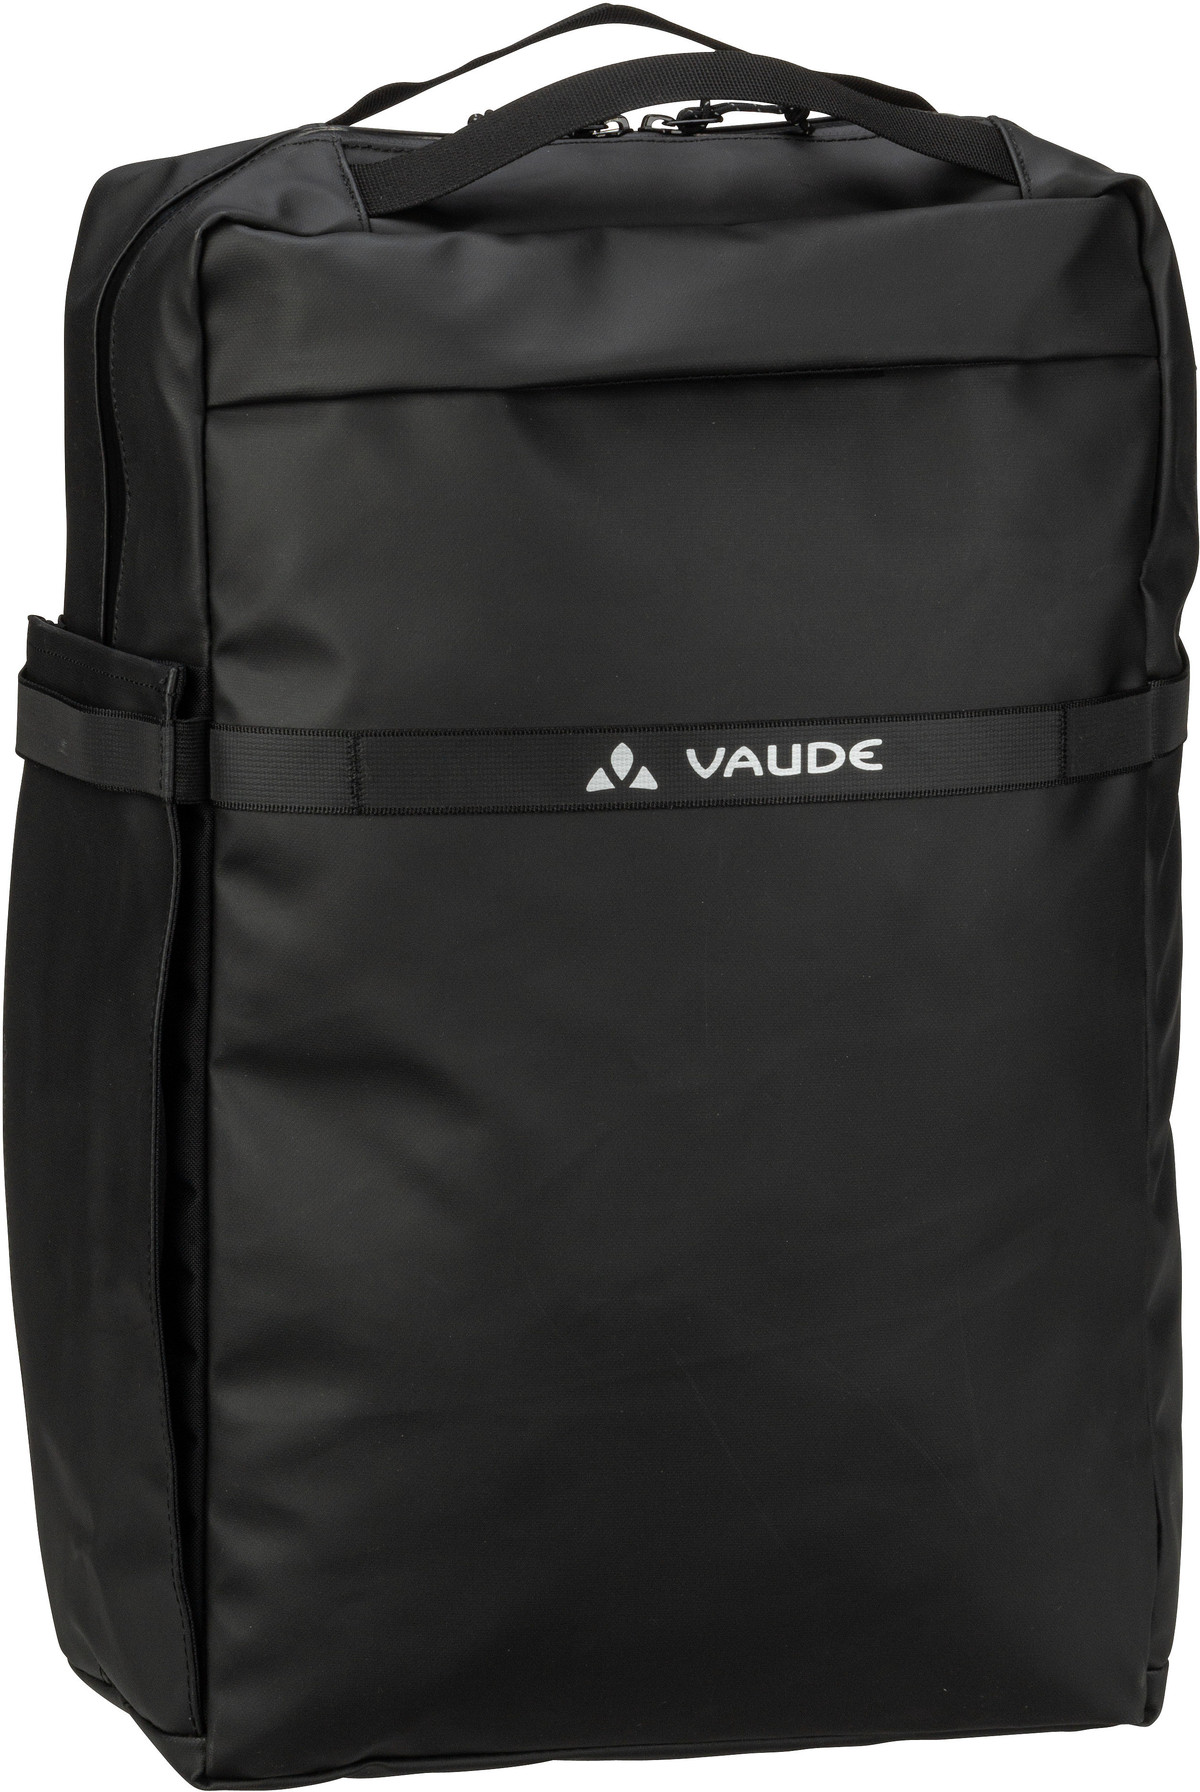 Vaude Mineo Transformer Backpack 20 - Black